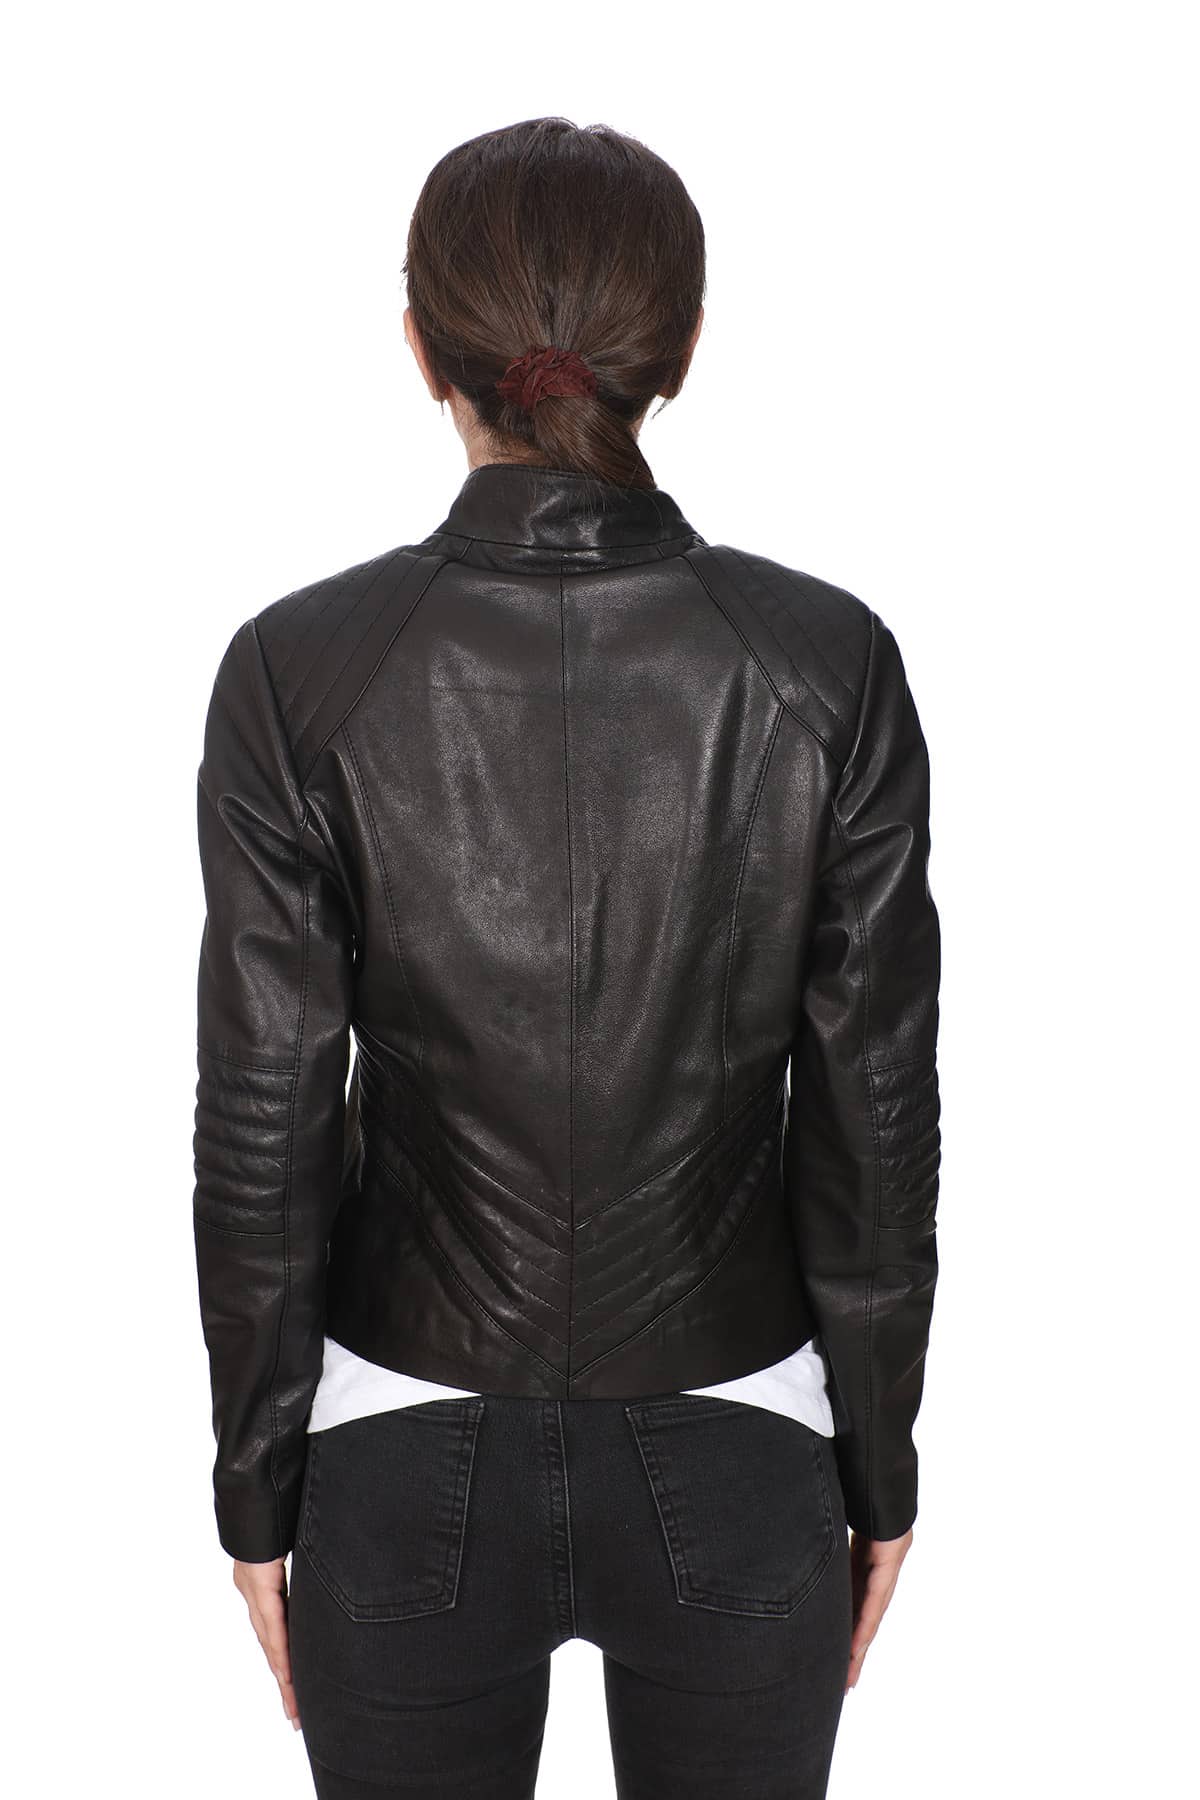 Archie Black Women’s Leather Jacket Biker Style – UFS